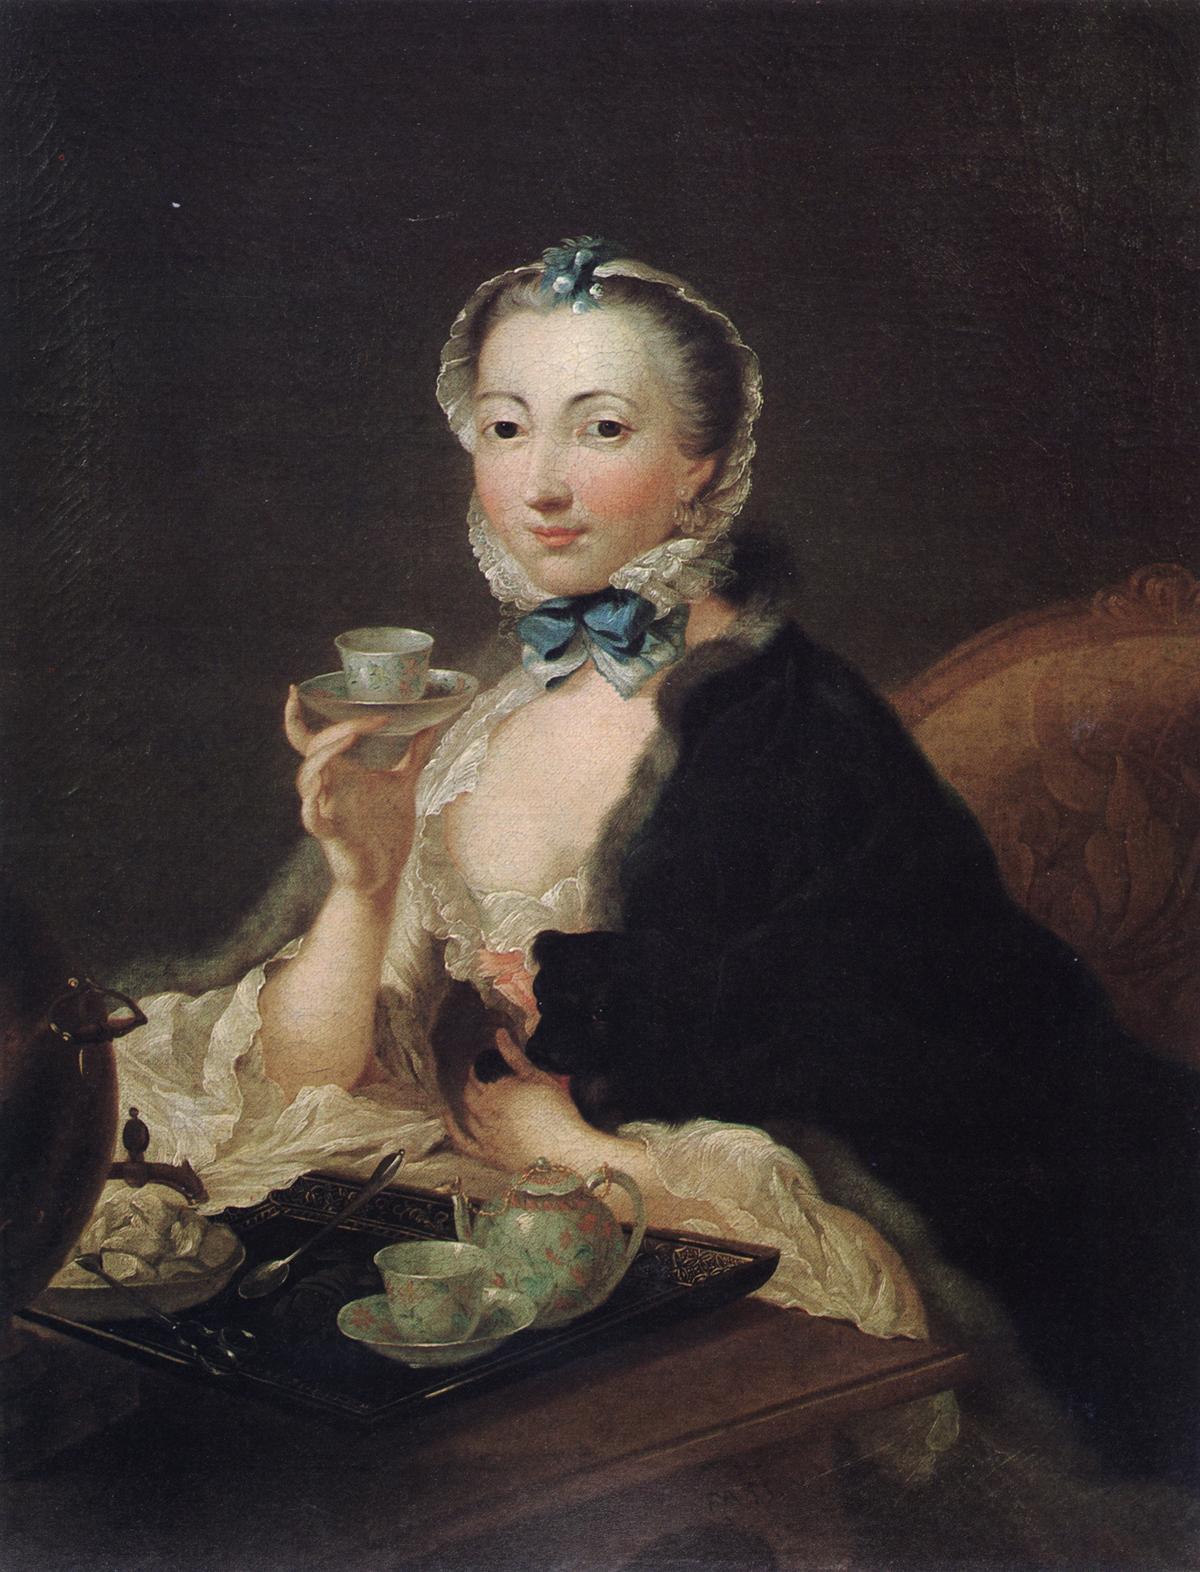 "Woman Drinking Coffee," 18th century, by Nicolas Henri Joseph de Facin. Van Zuylen collection in Liège, Belgium. (PD-US)